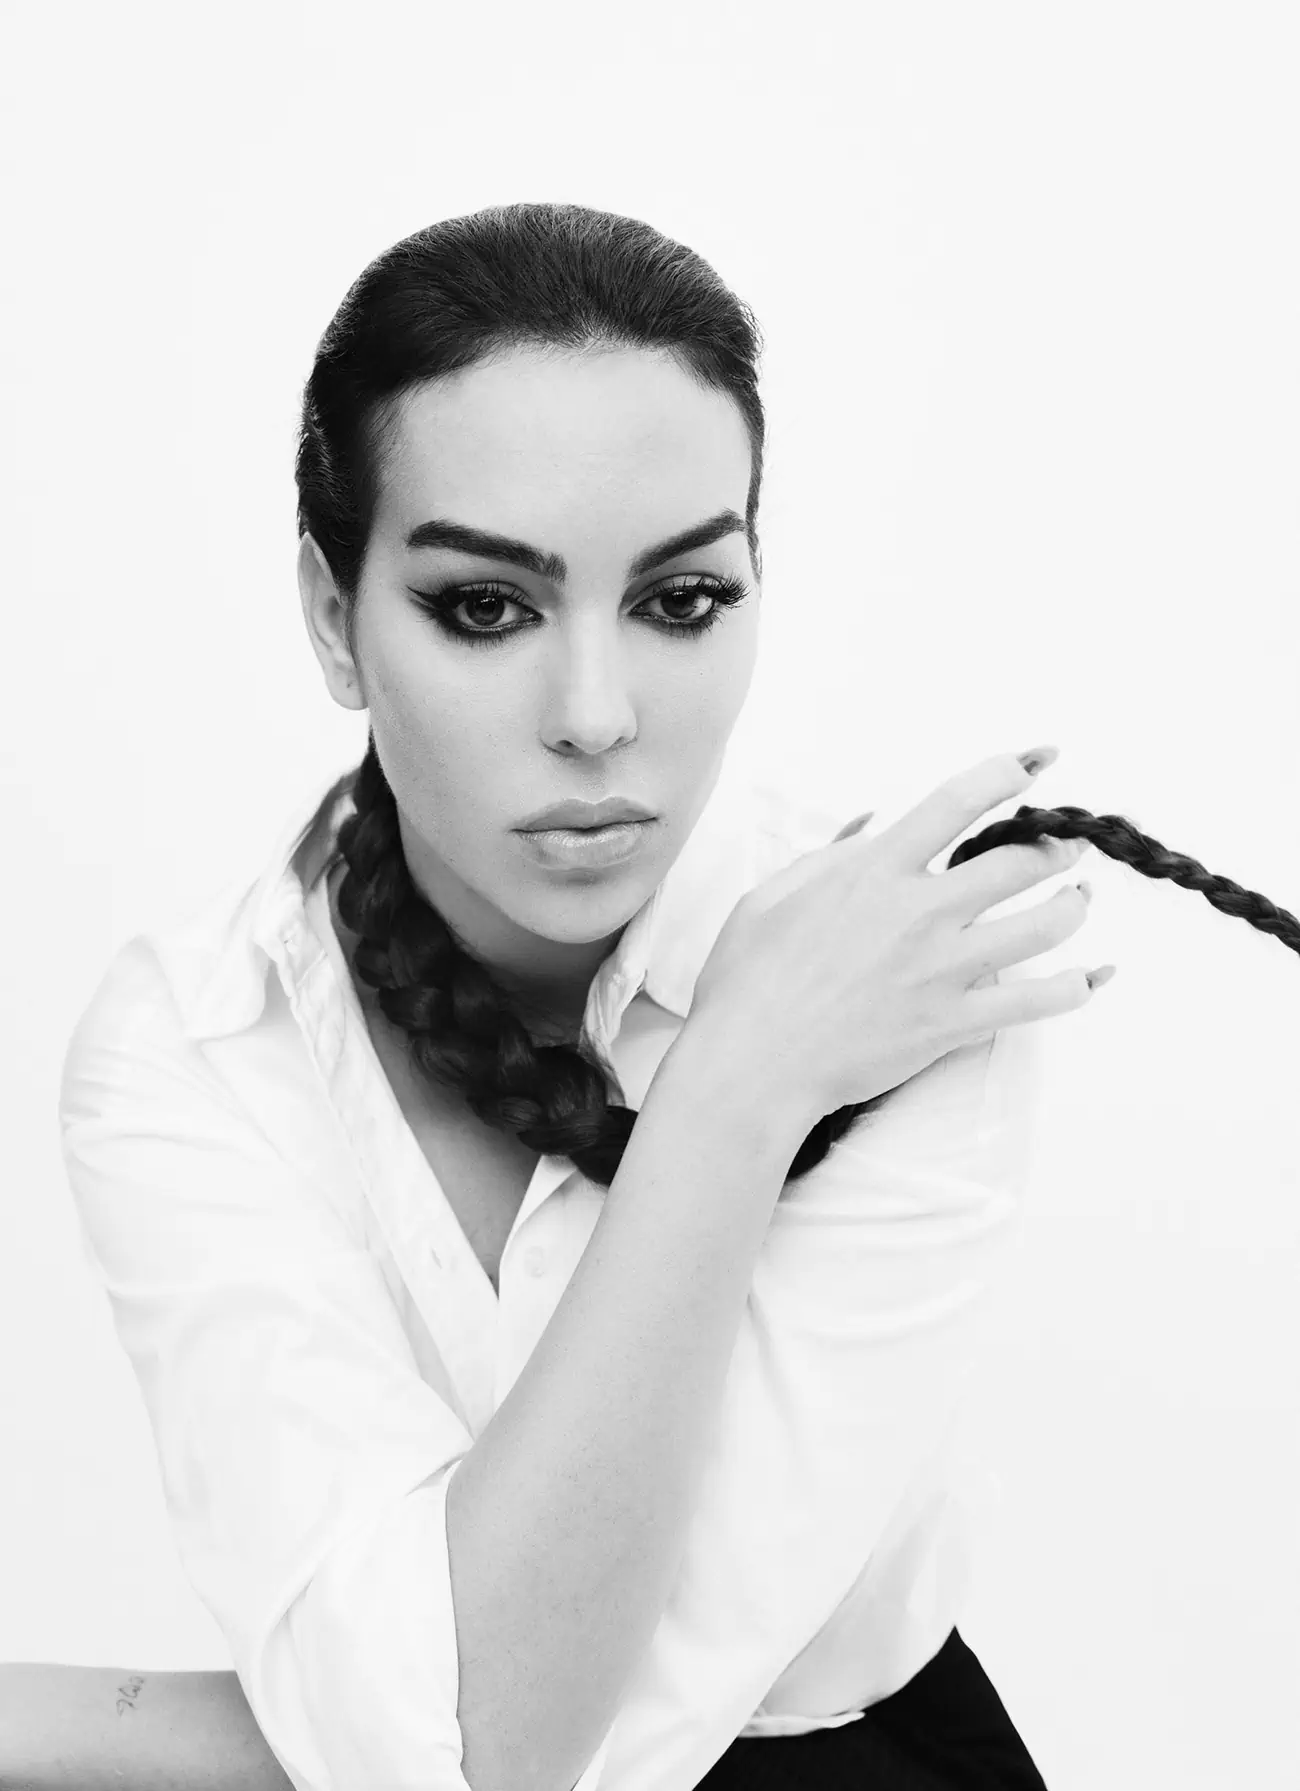 Georgina Rodríguez covers Vogue Mexico & Latin America February 2024 by Javier Biosca